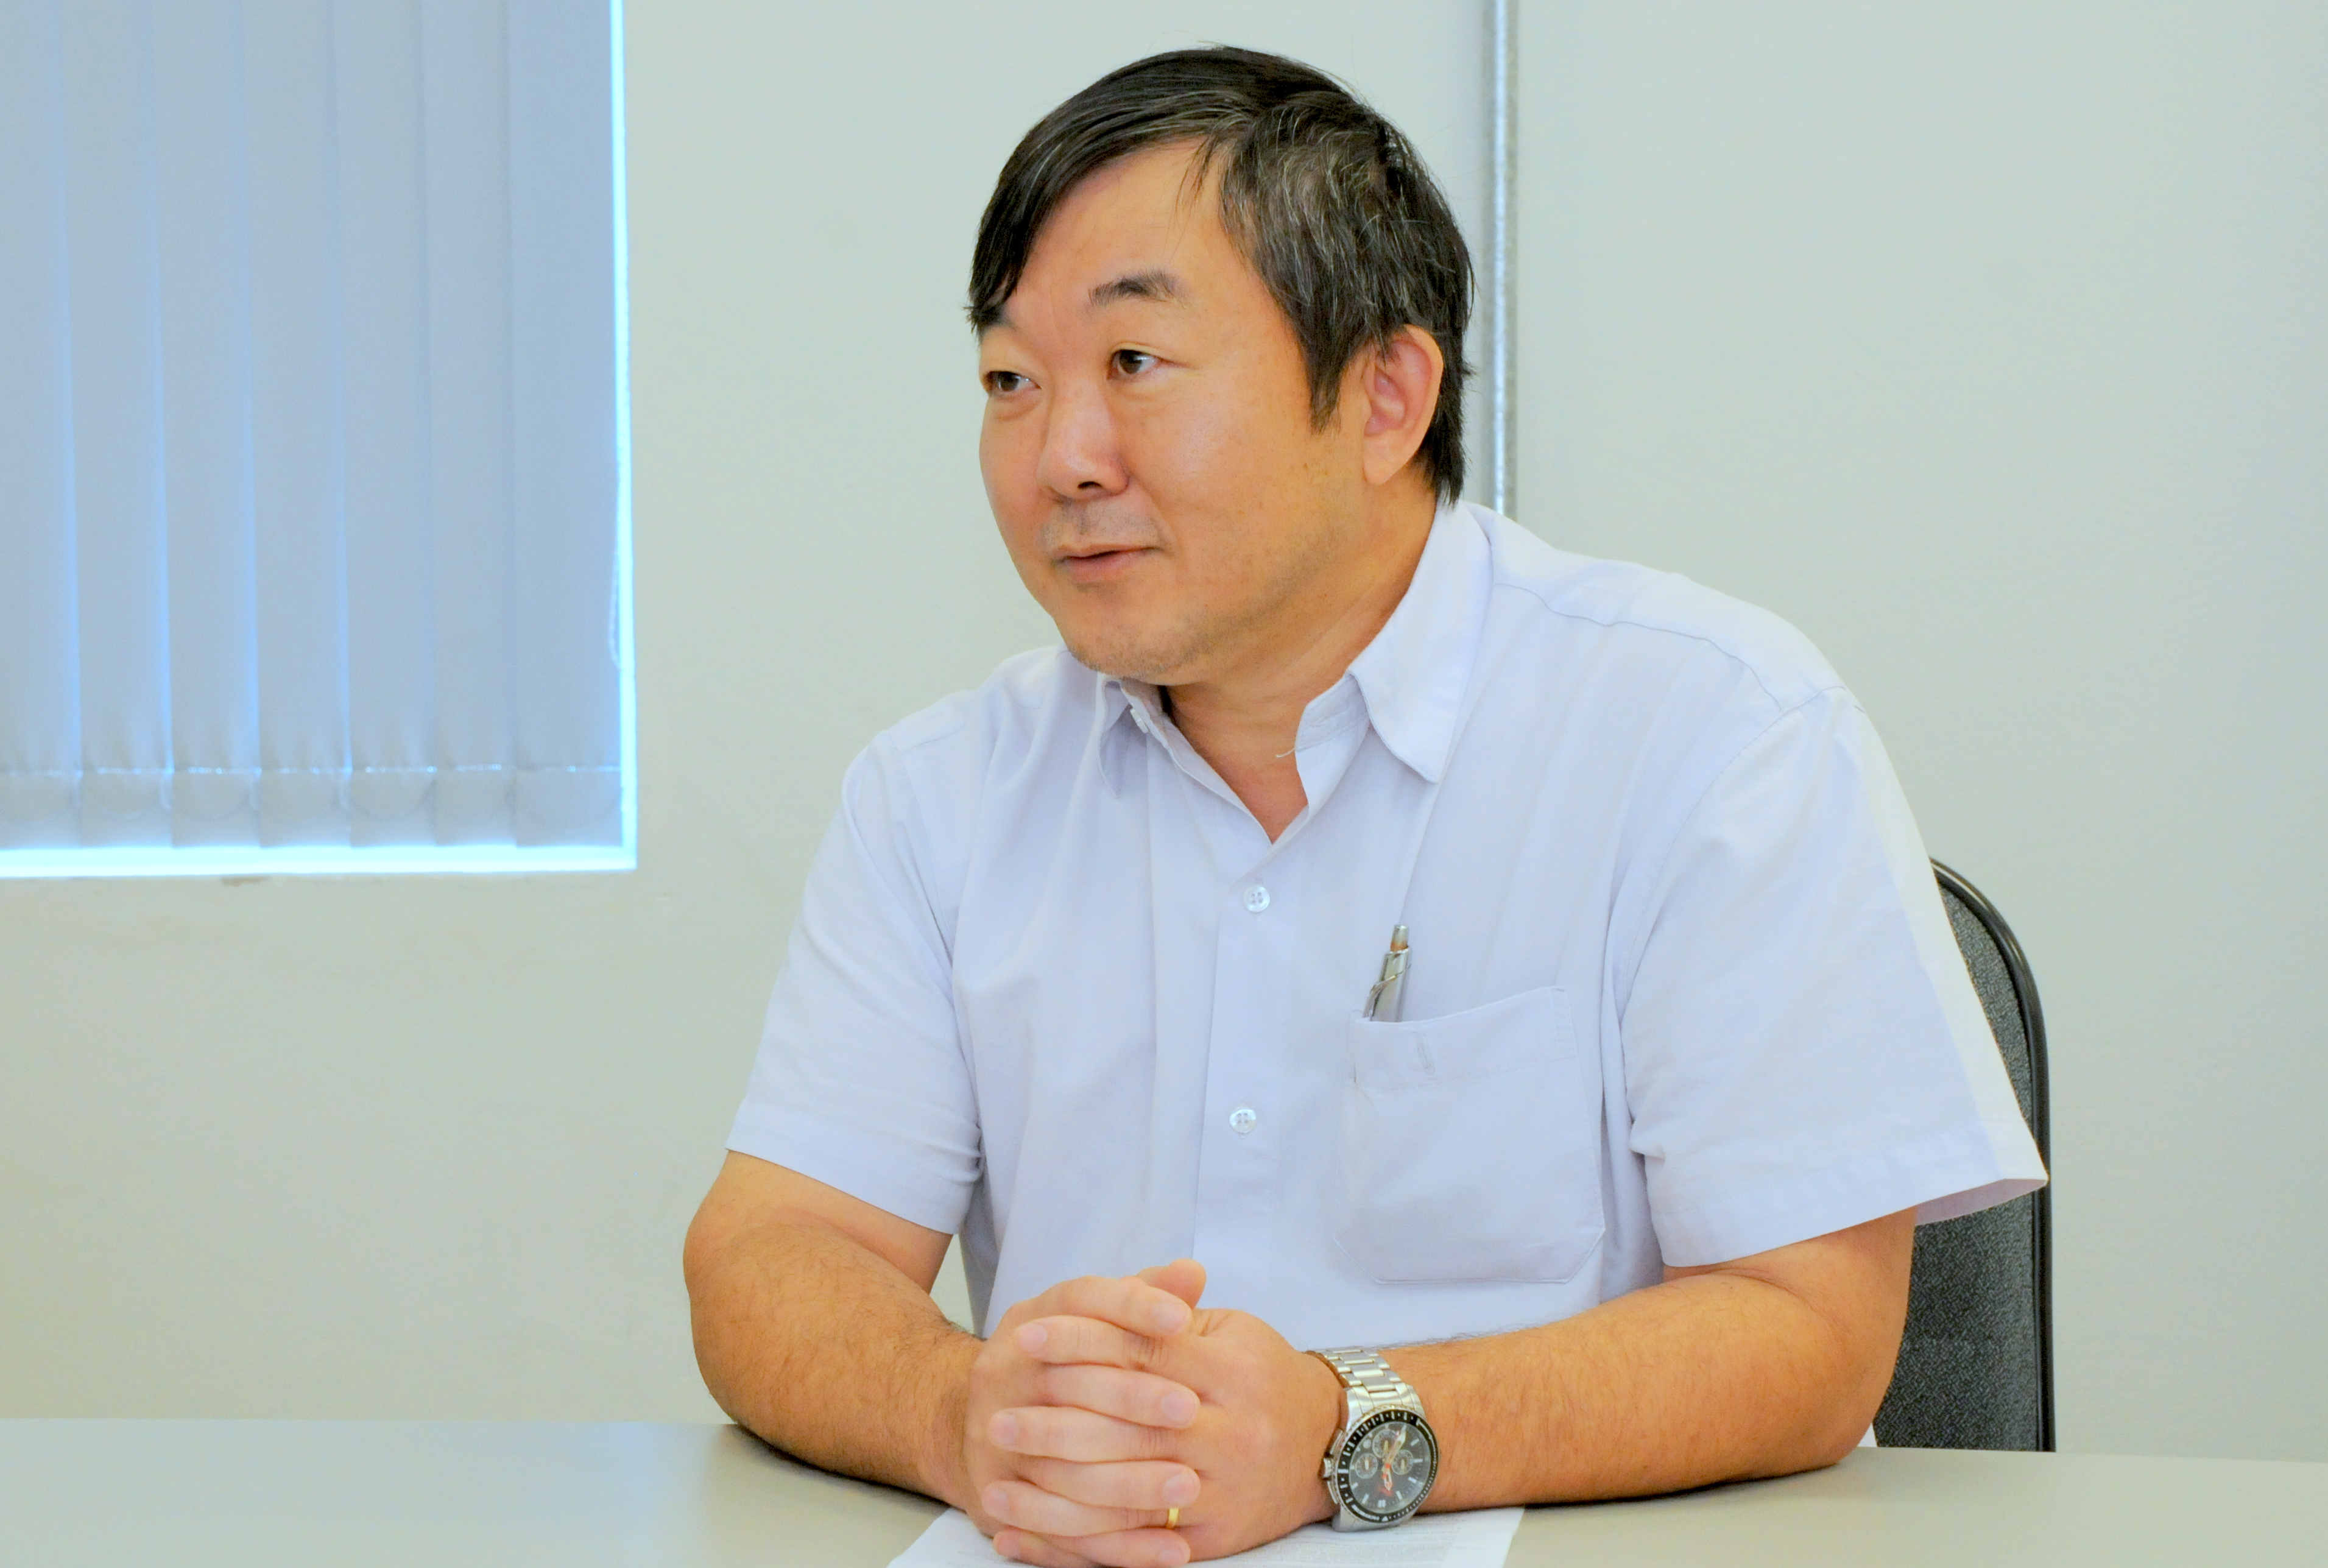 foto mostra professor lauro kubota sentado à mesa, vestindo camisa azul